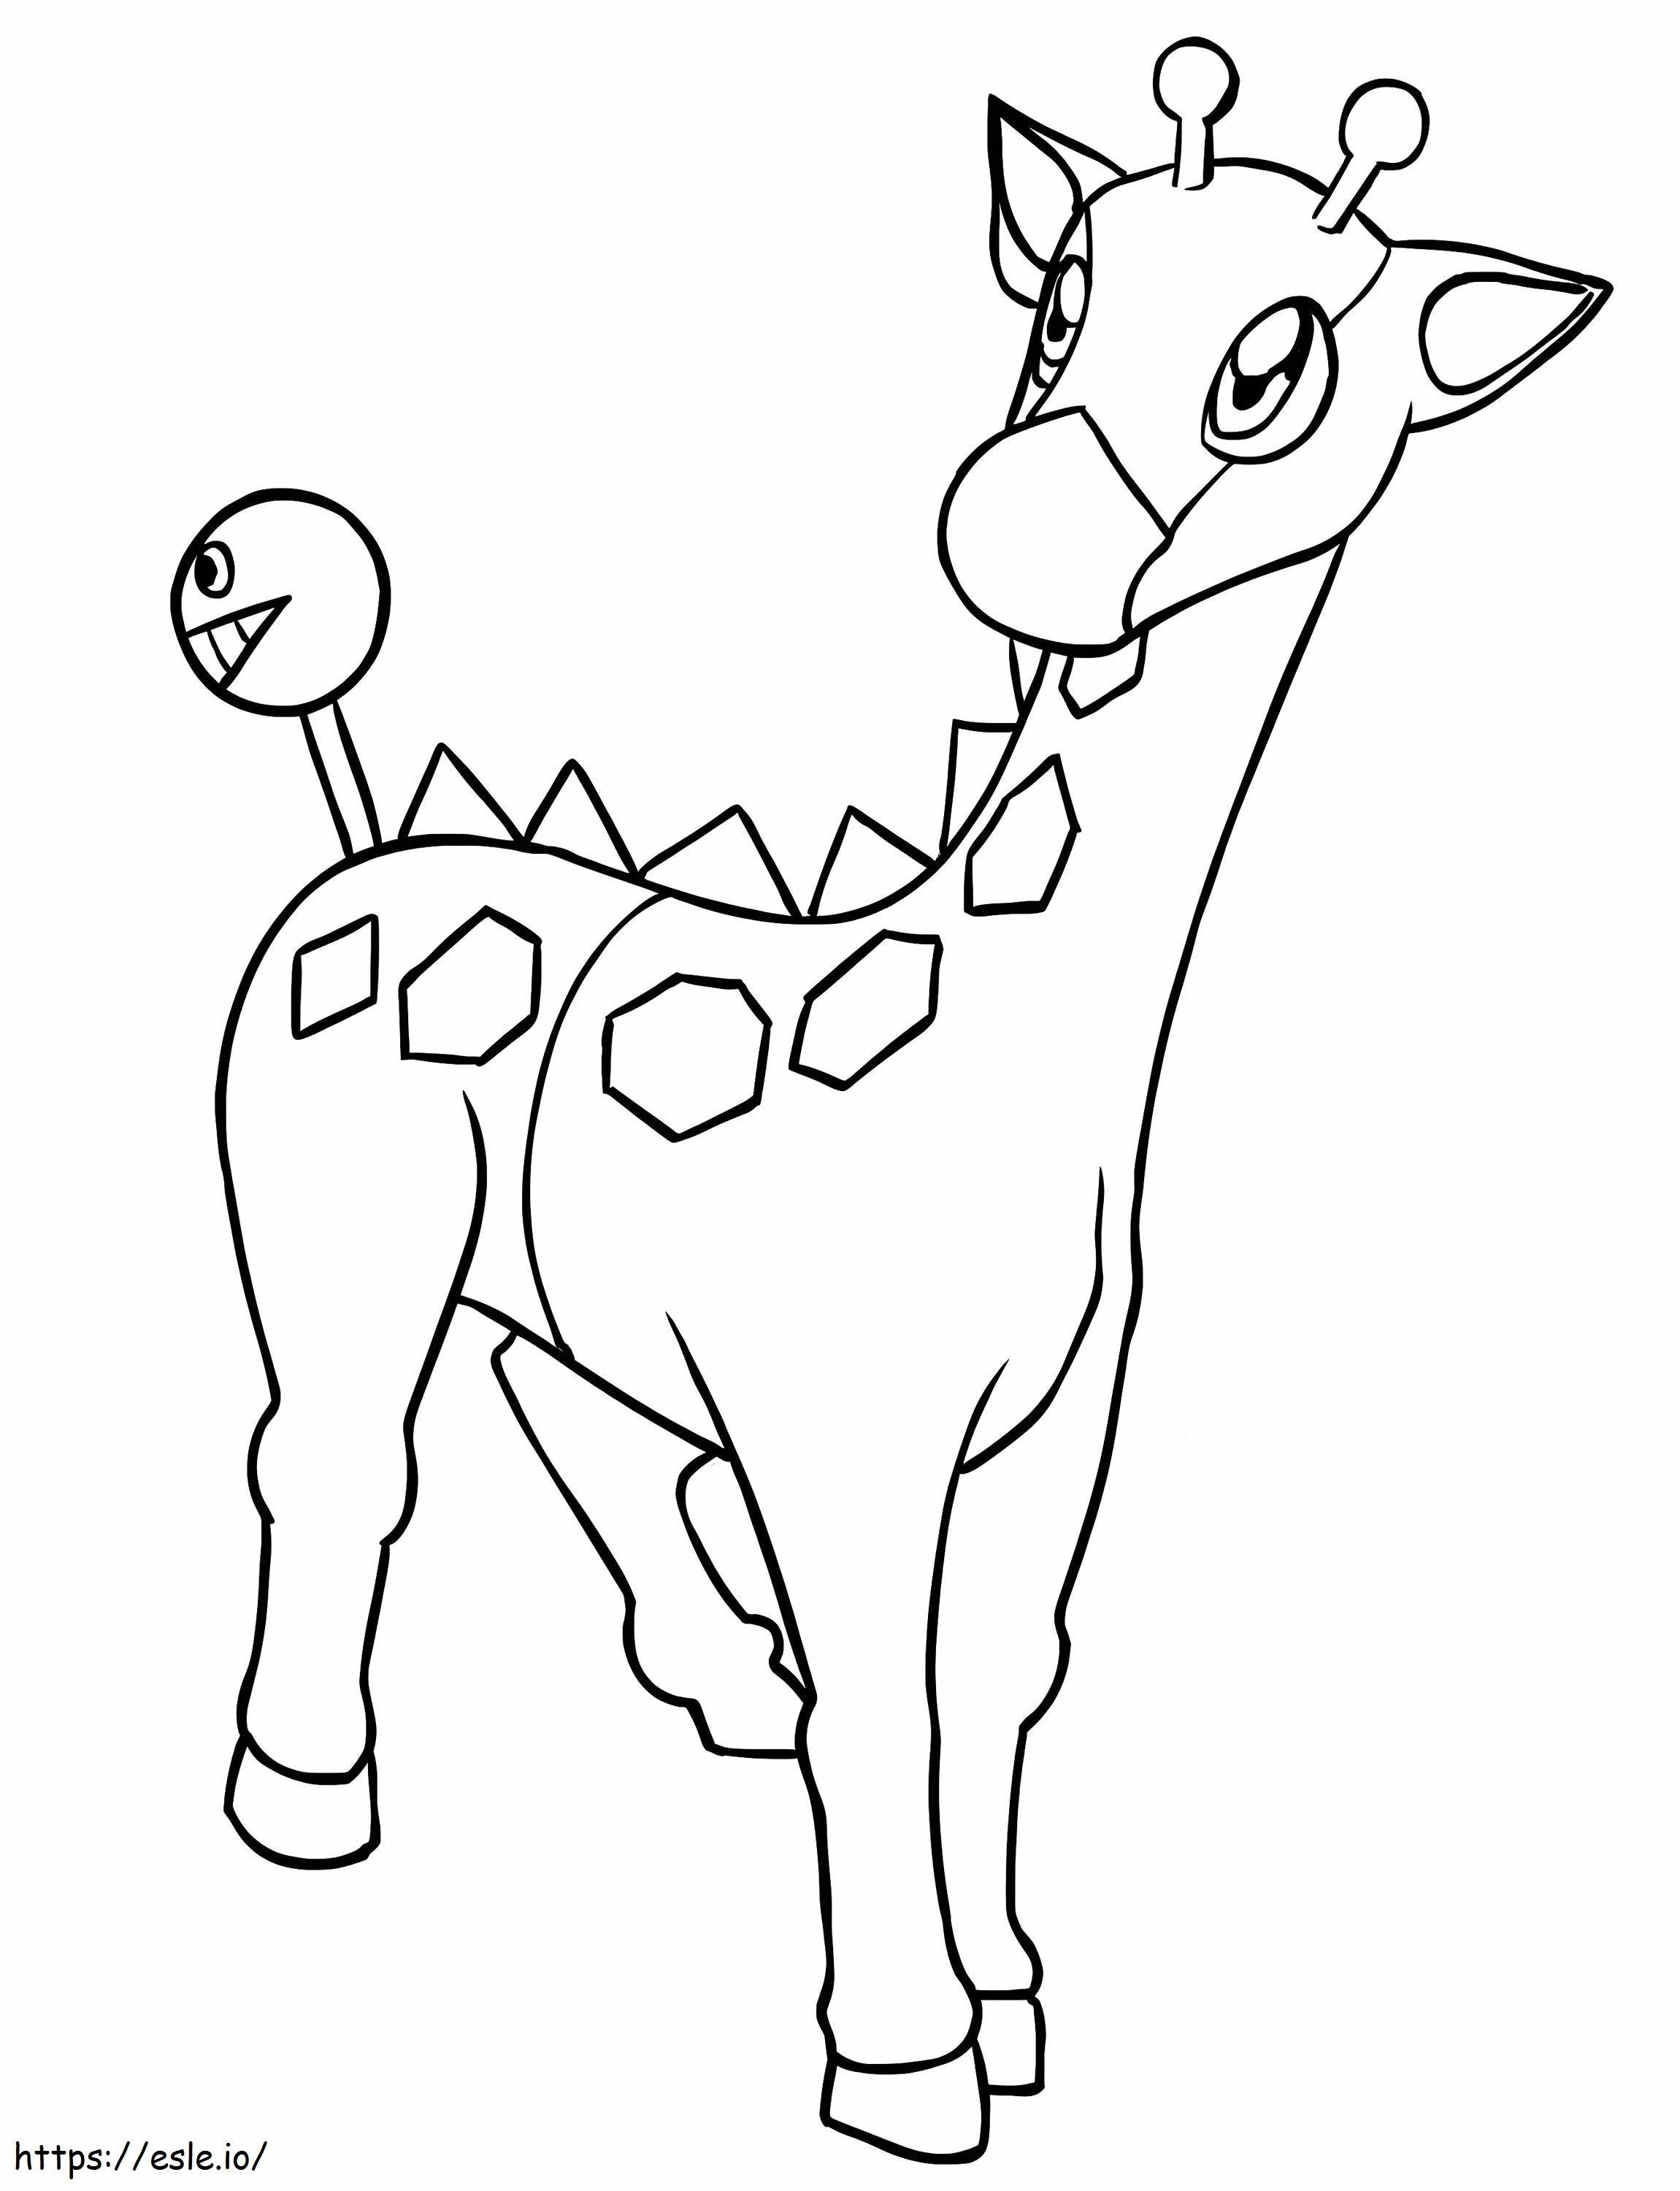 Coloriage Pokémon Girafarig à imprimer dessin